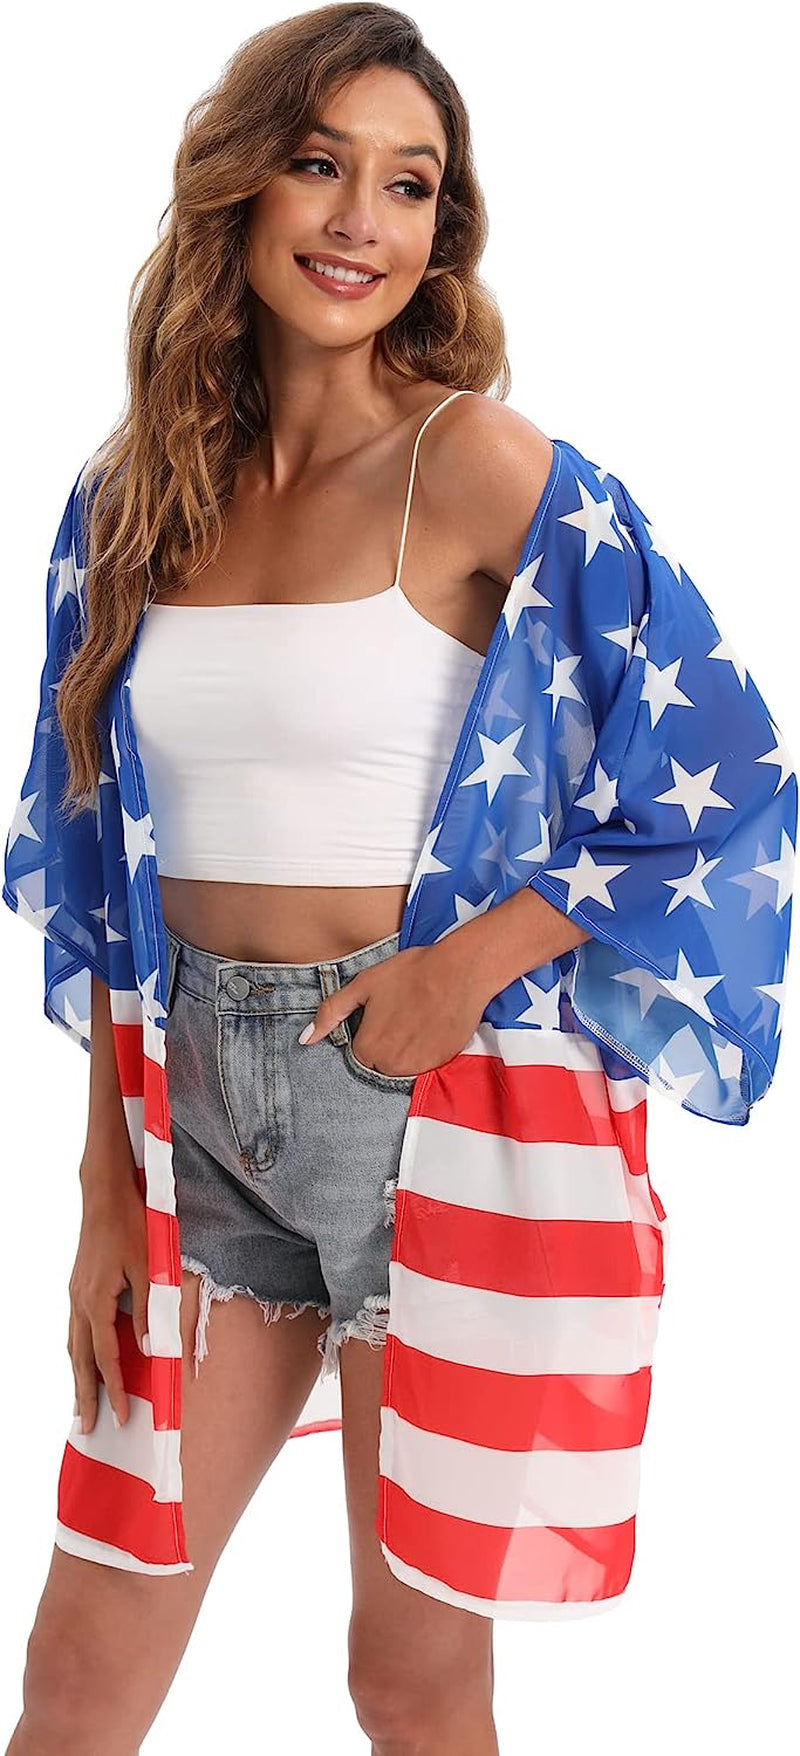  Women's American Flag Kimono Cover up Beachwear Cardigan Loose Tops Shirt Blouse